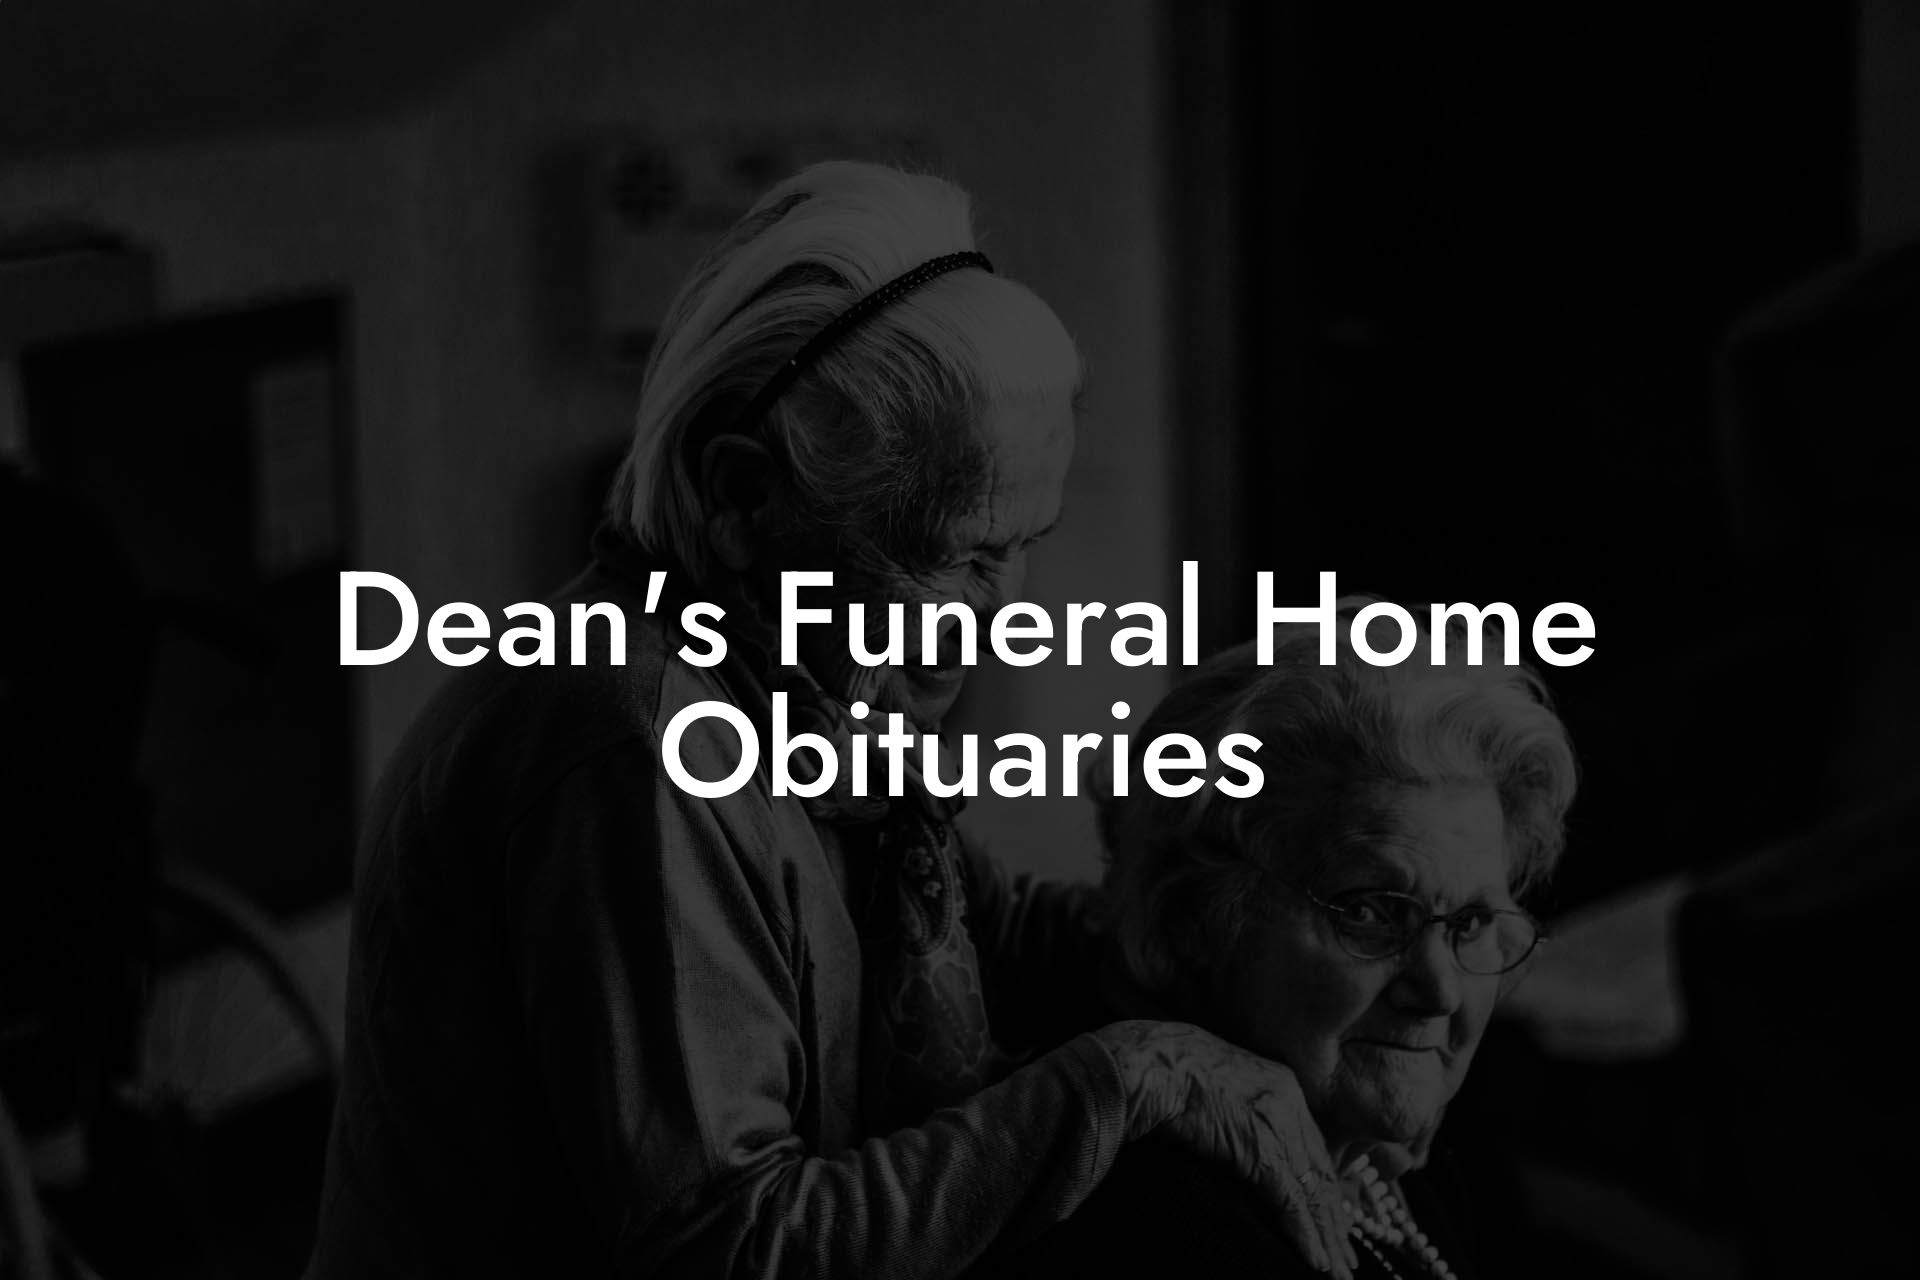 Dean's Funeral Home Obituaries